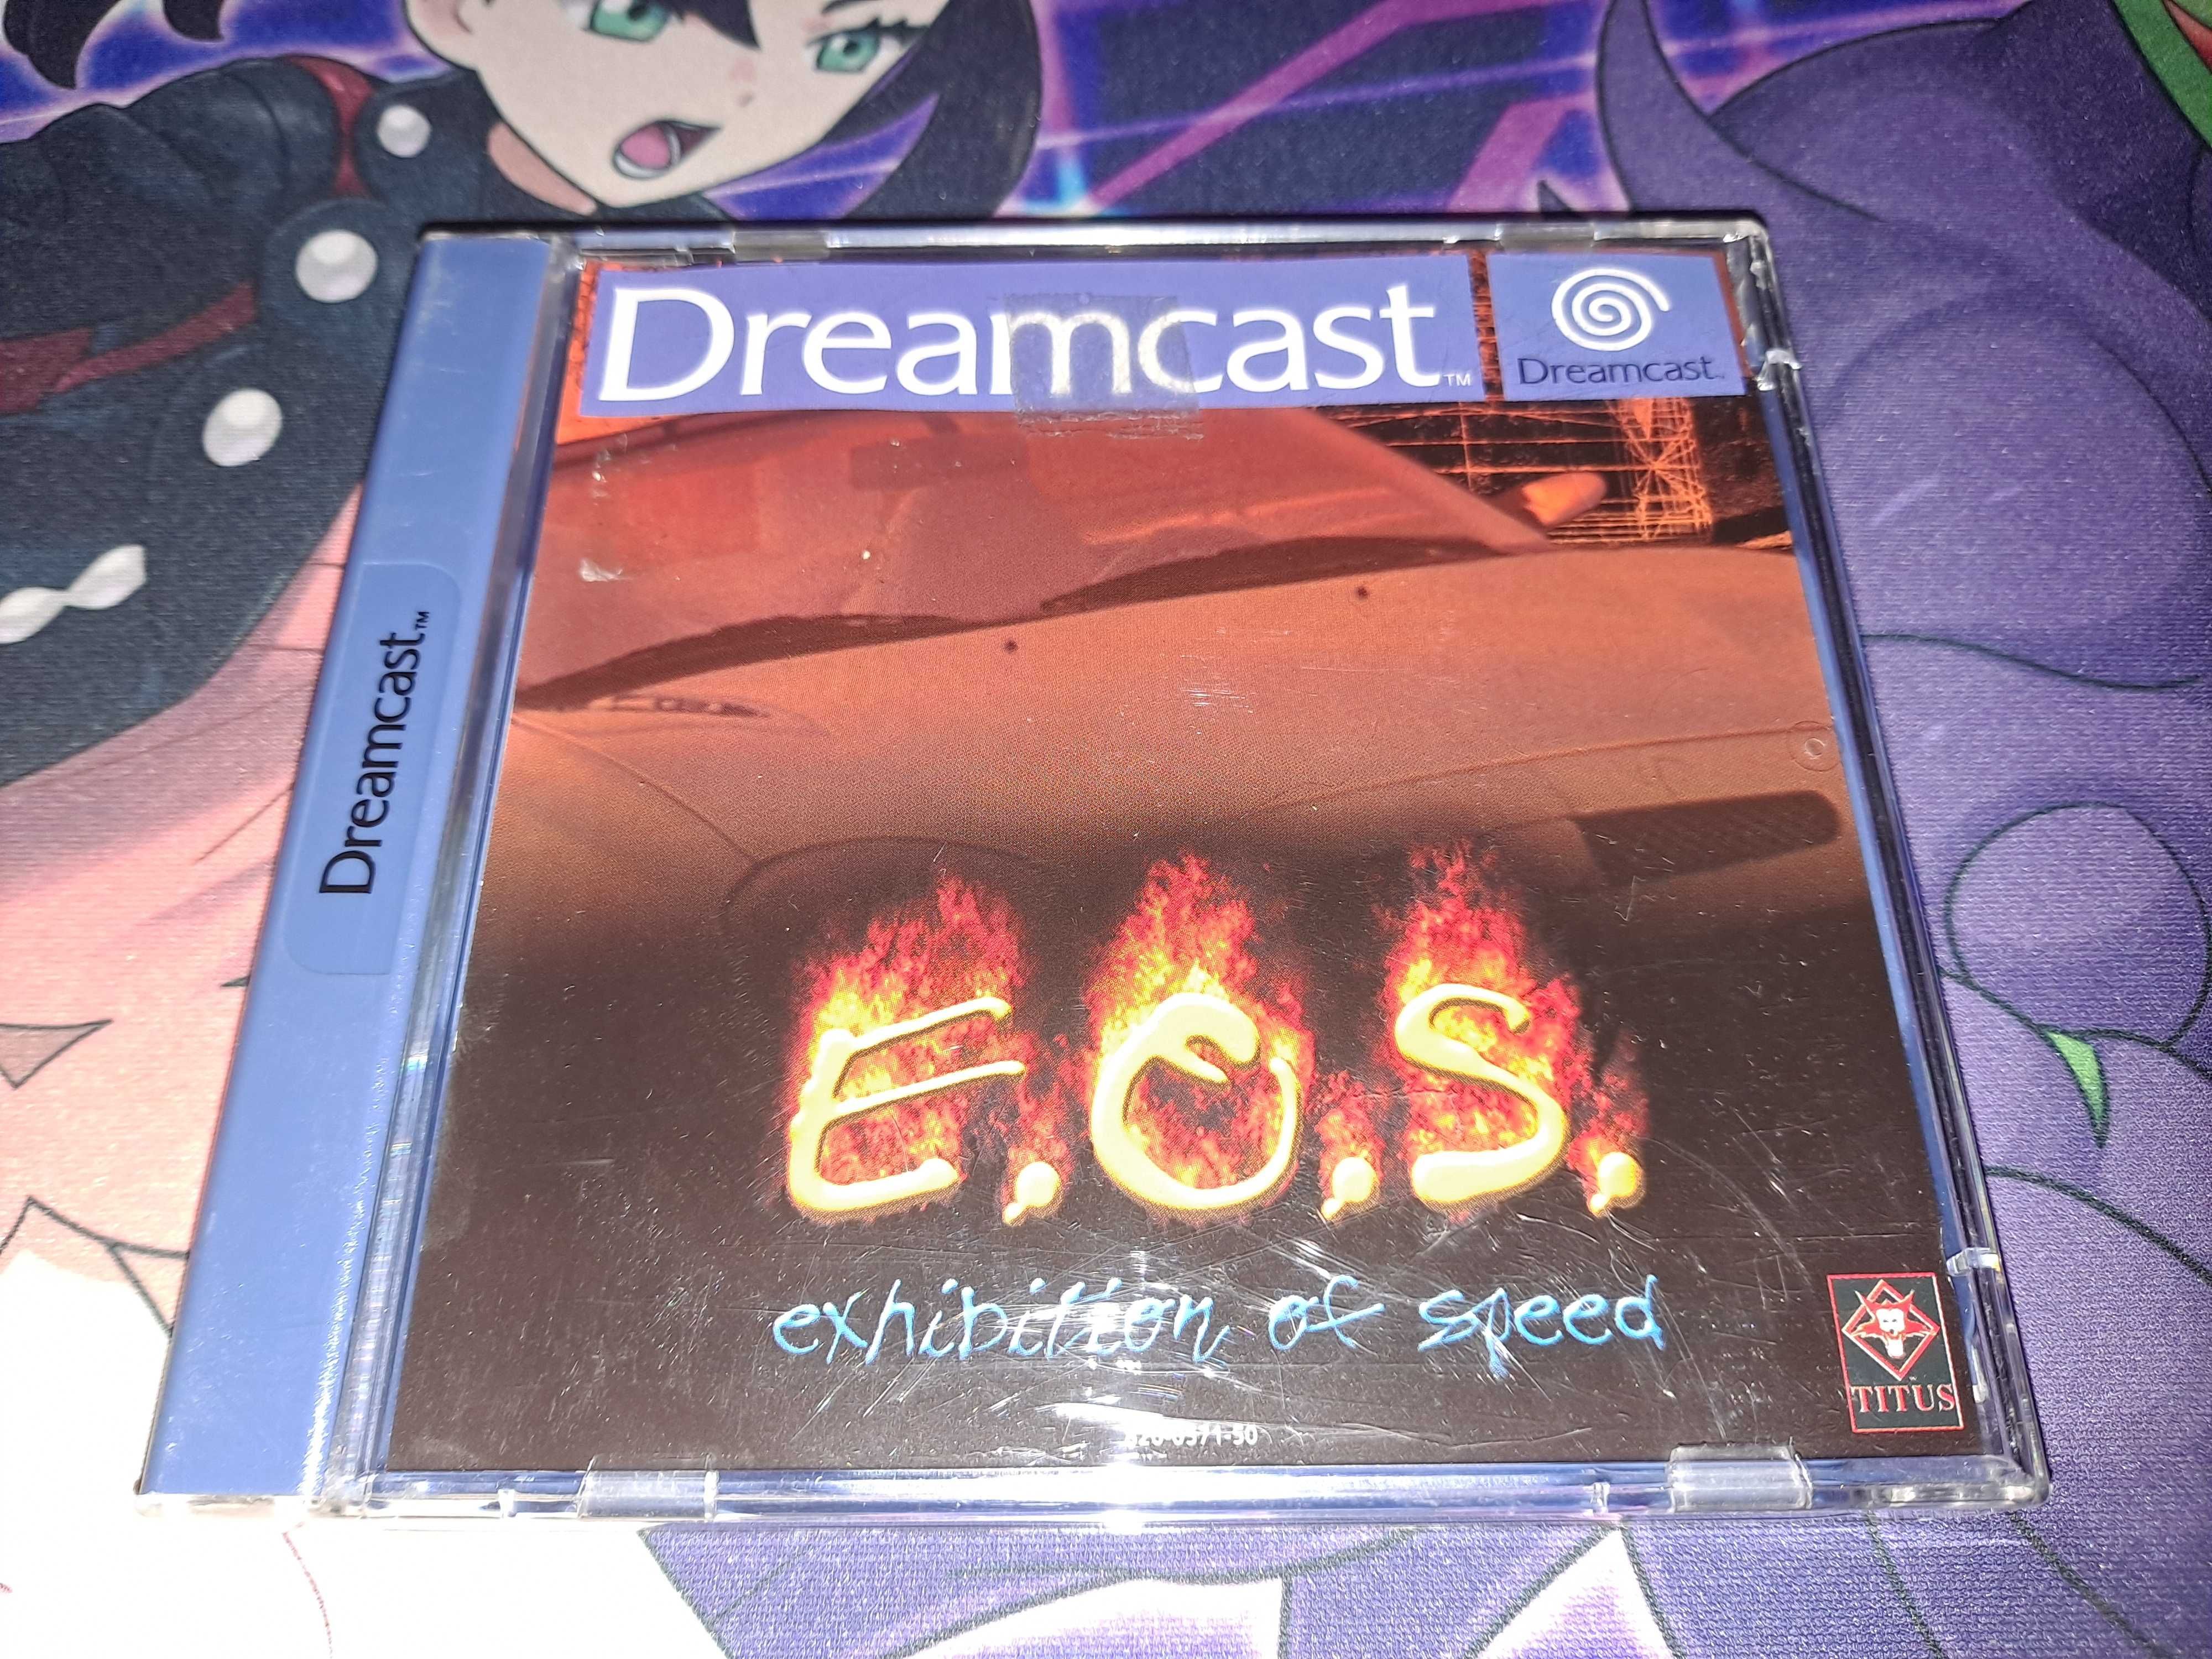 E.O.S. Exhibition of Speed / Dreamcast / Sosnowiec